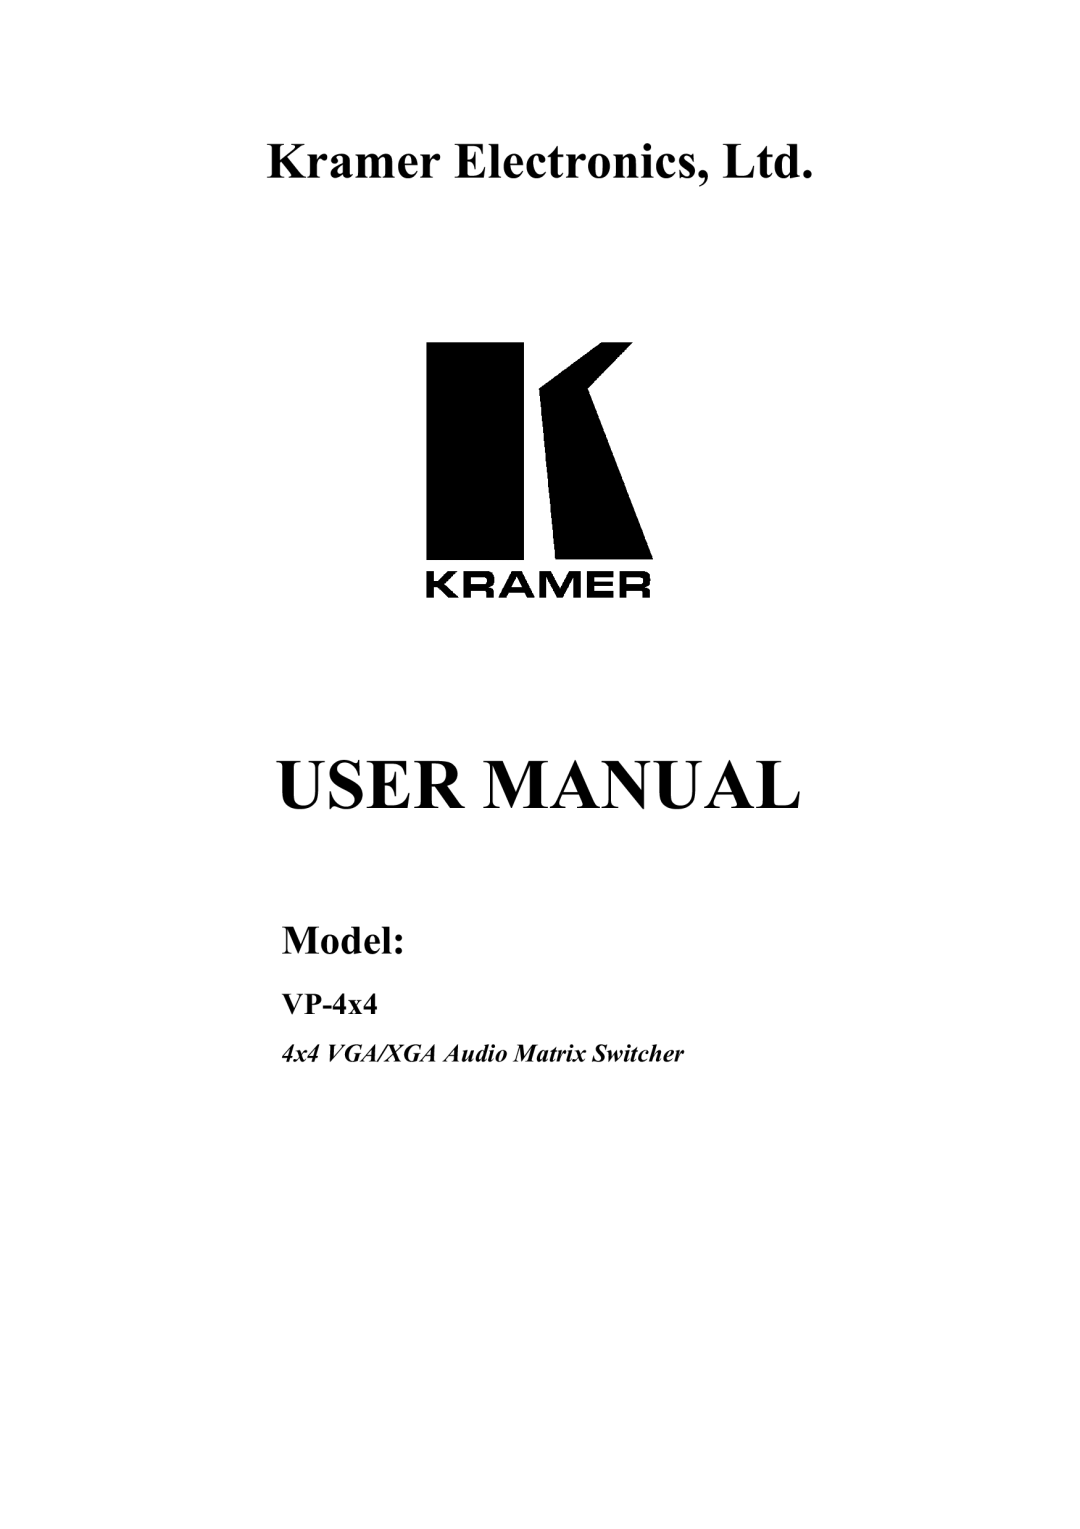 Kramer Electronics VP-4x4 manual 9*$*$$XGLR0DWUL6ZLWFKHU, 8650$18$, Udphuohfwurqlfv/Wg, 0RGHO 